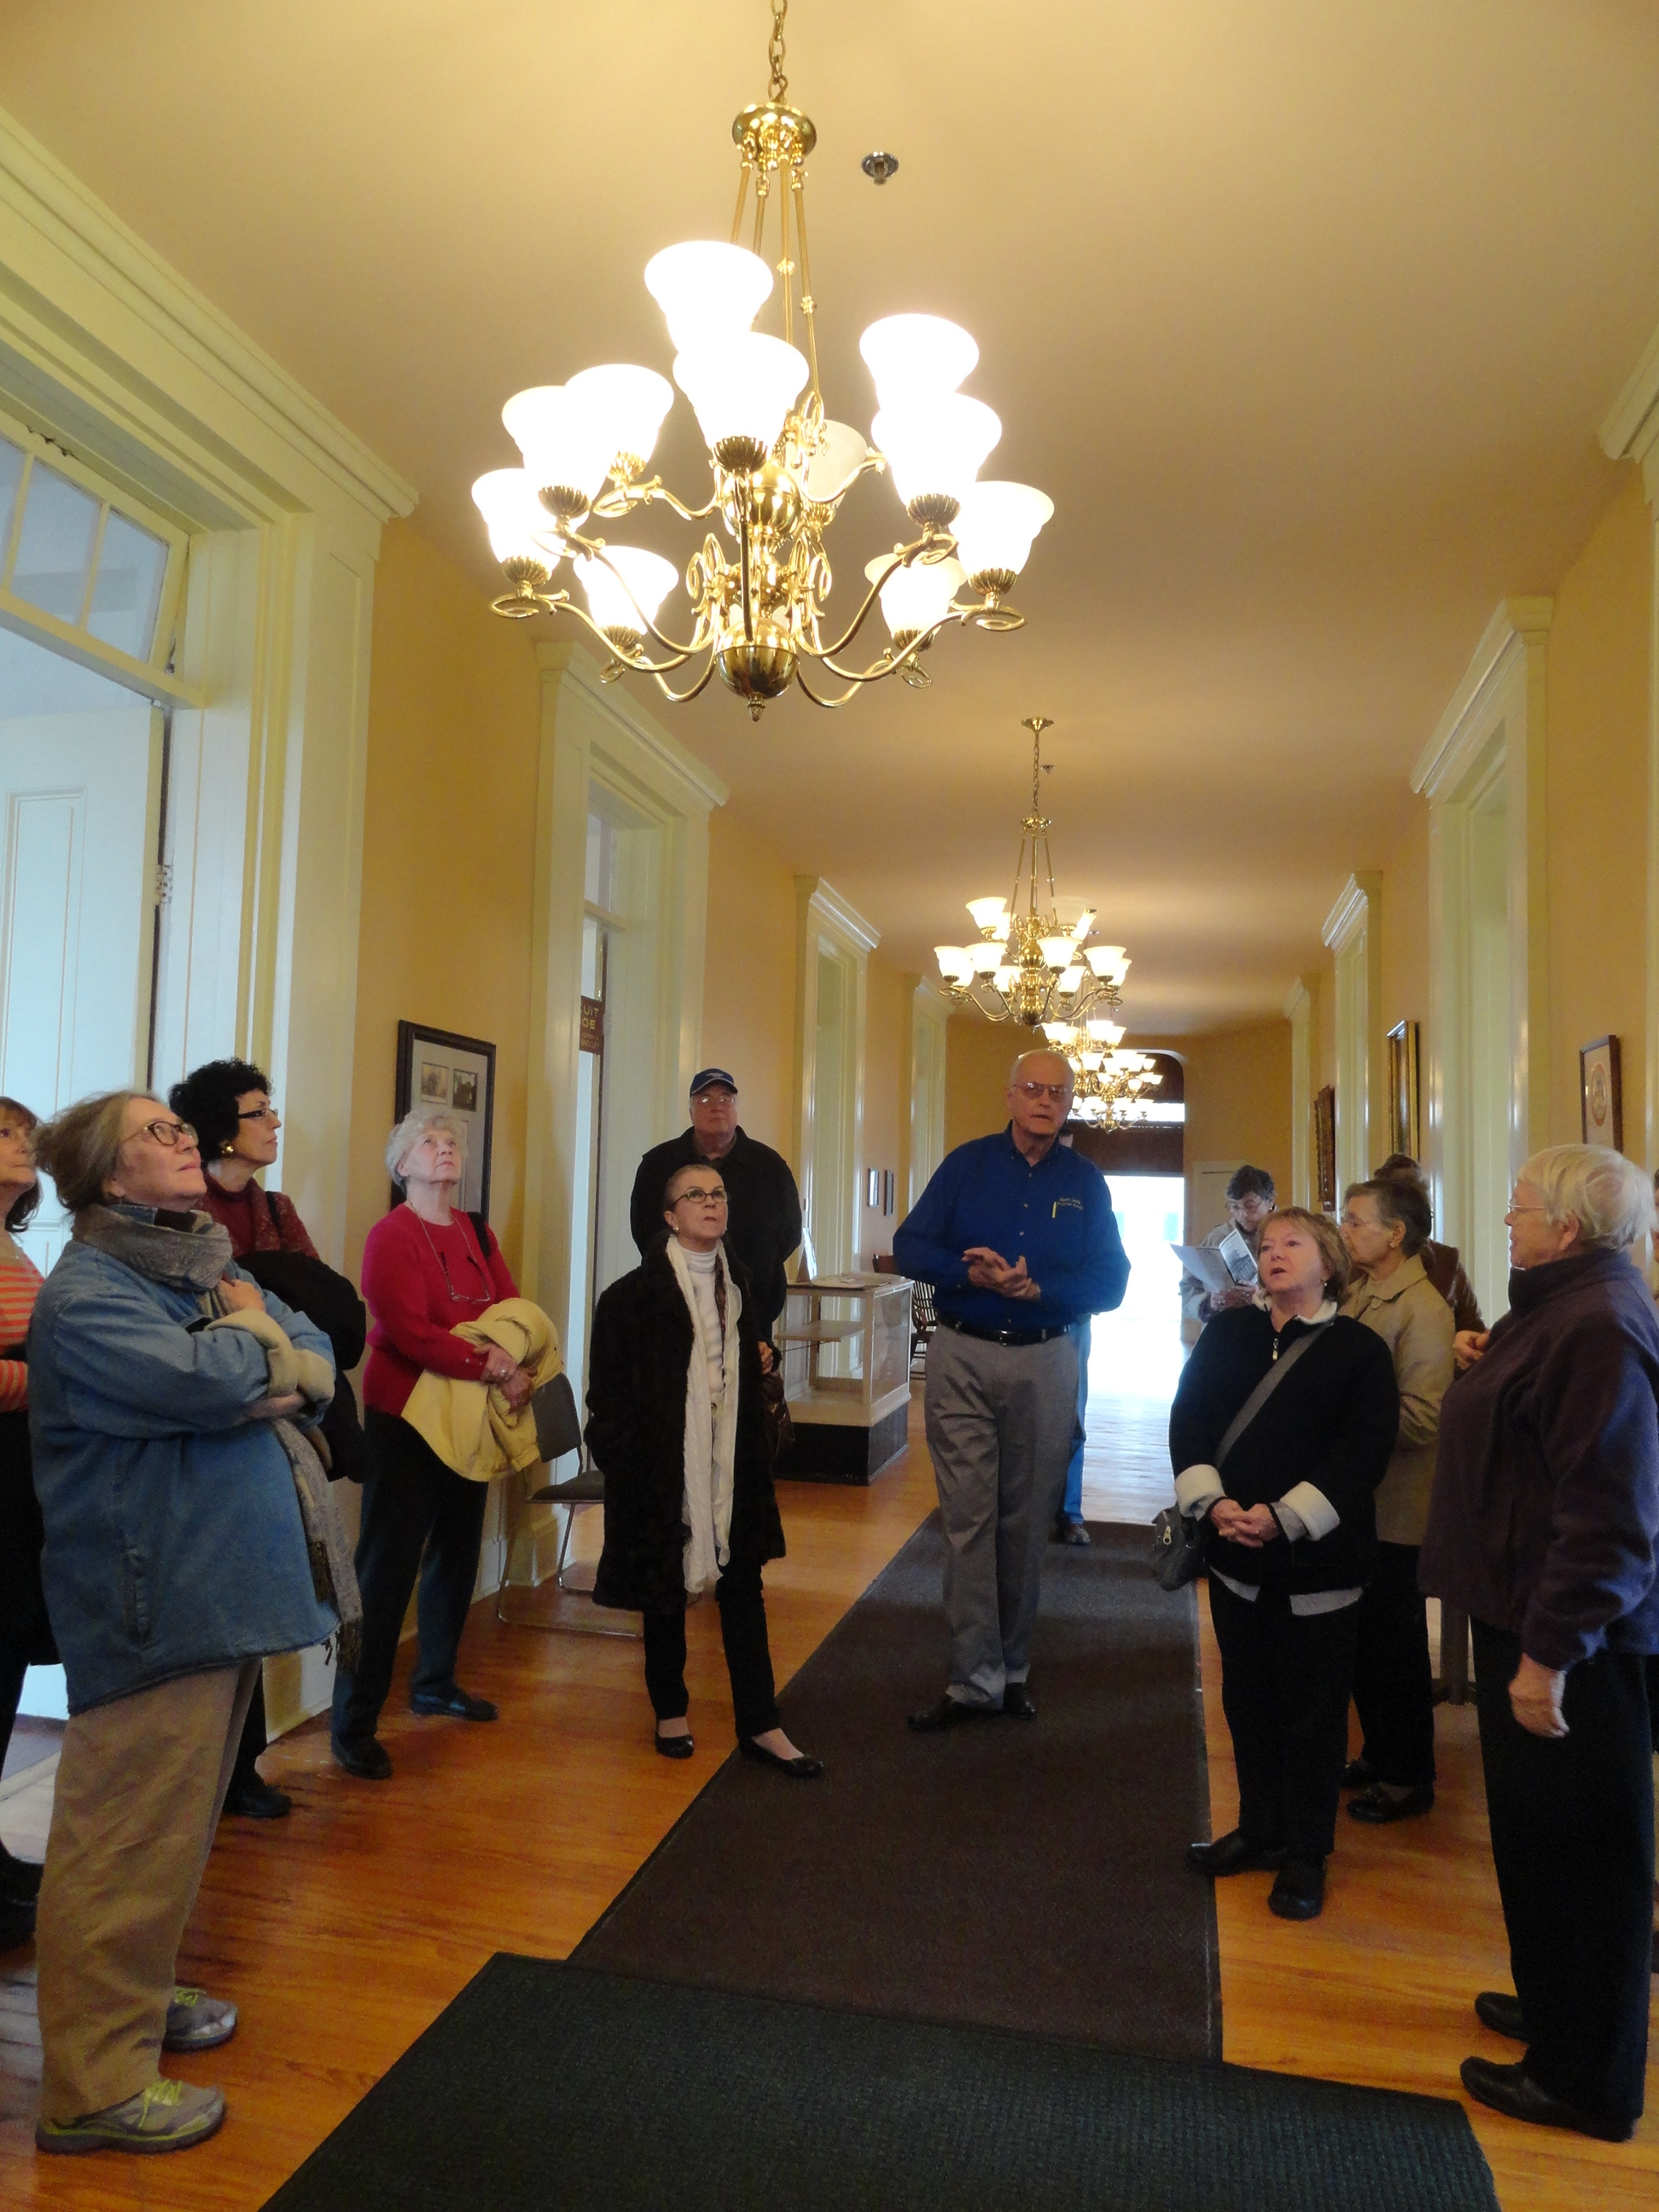 a dozen visitors viewing the chandeliers